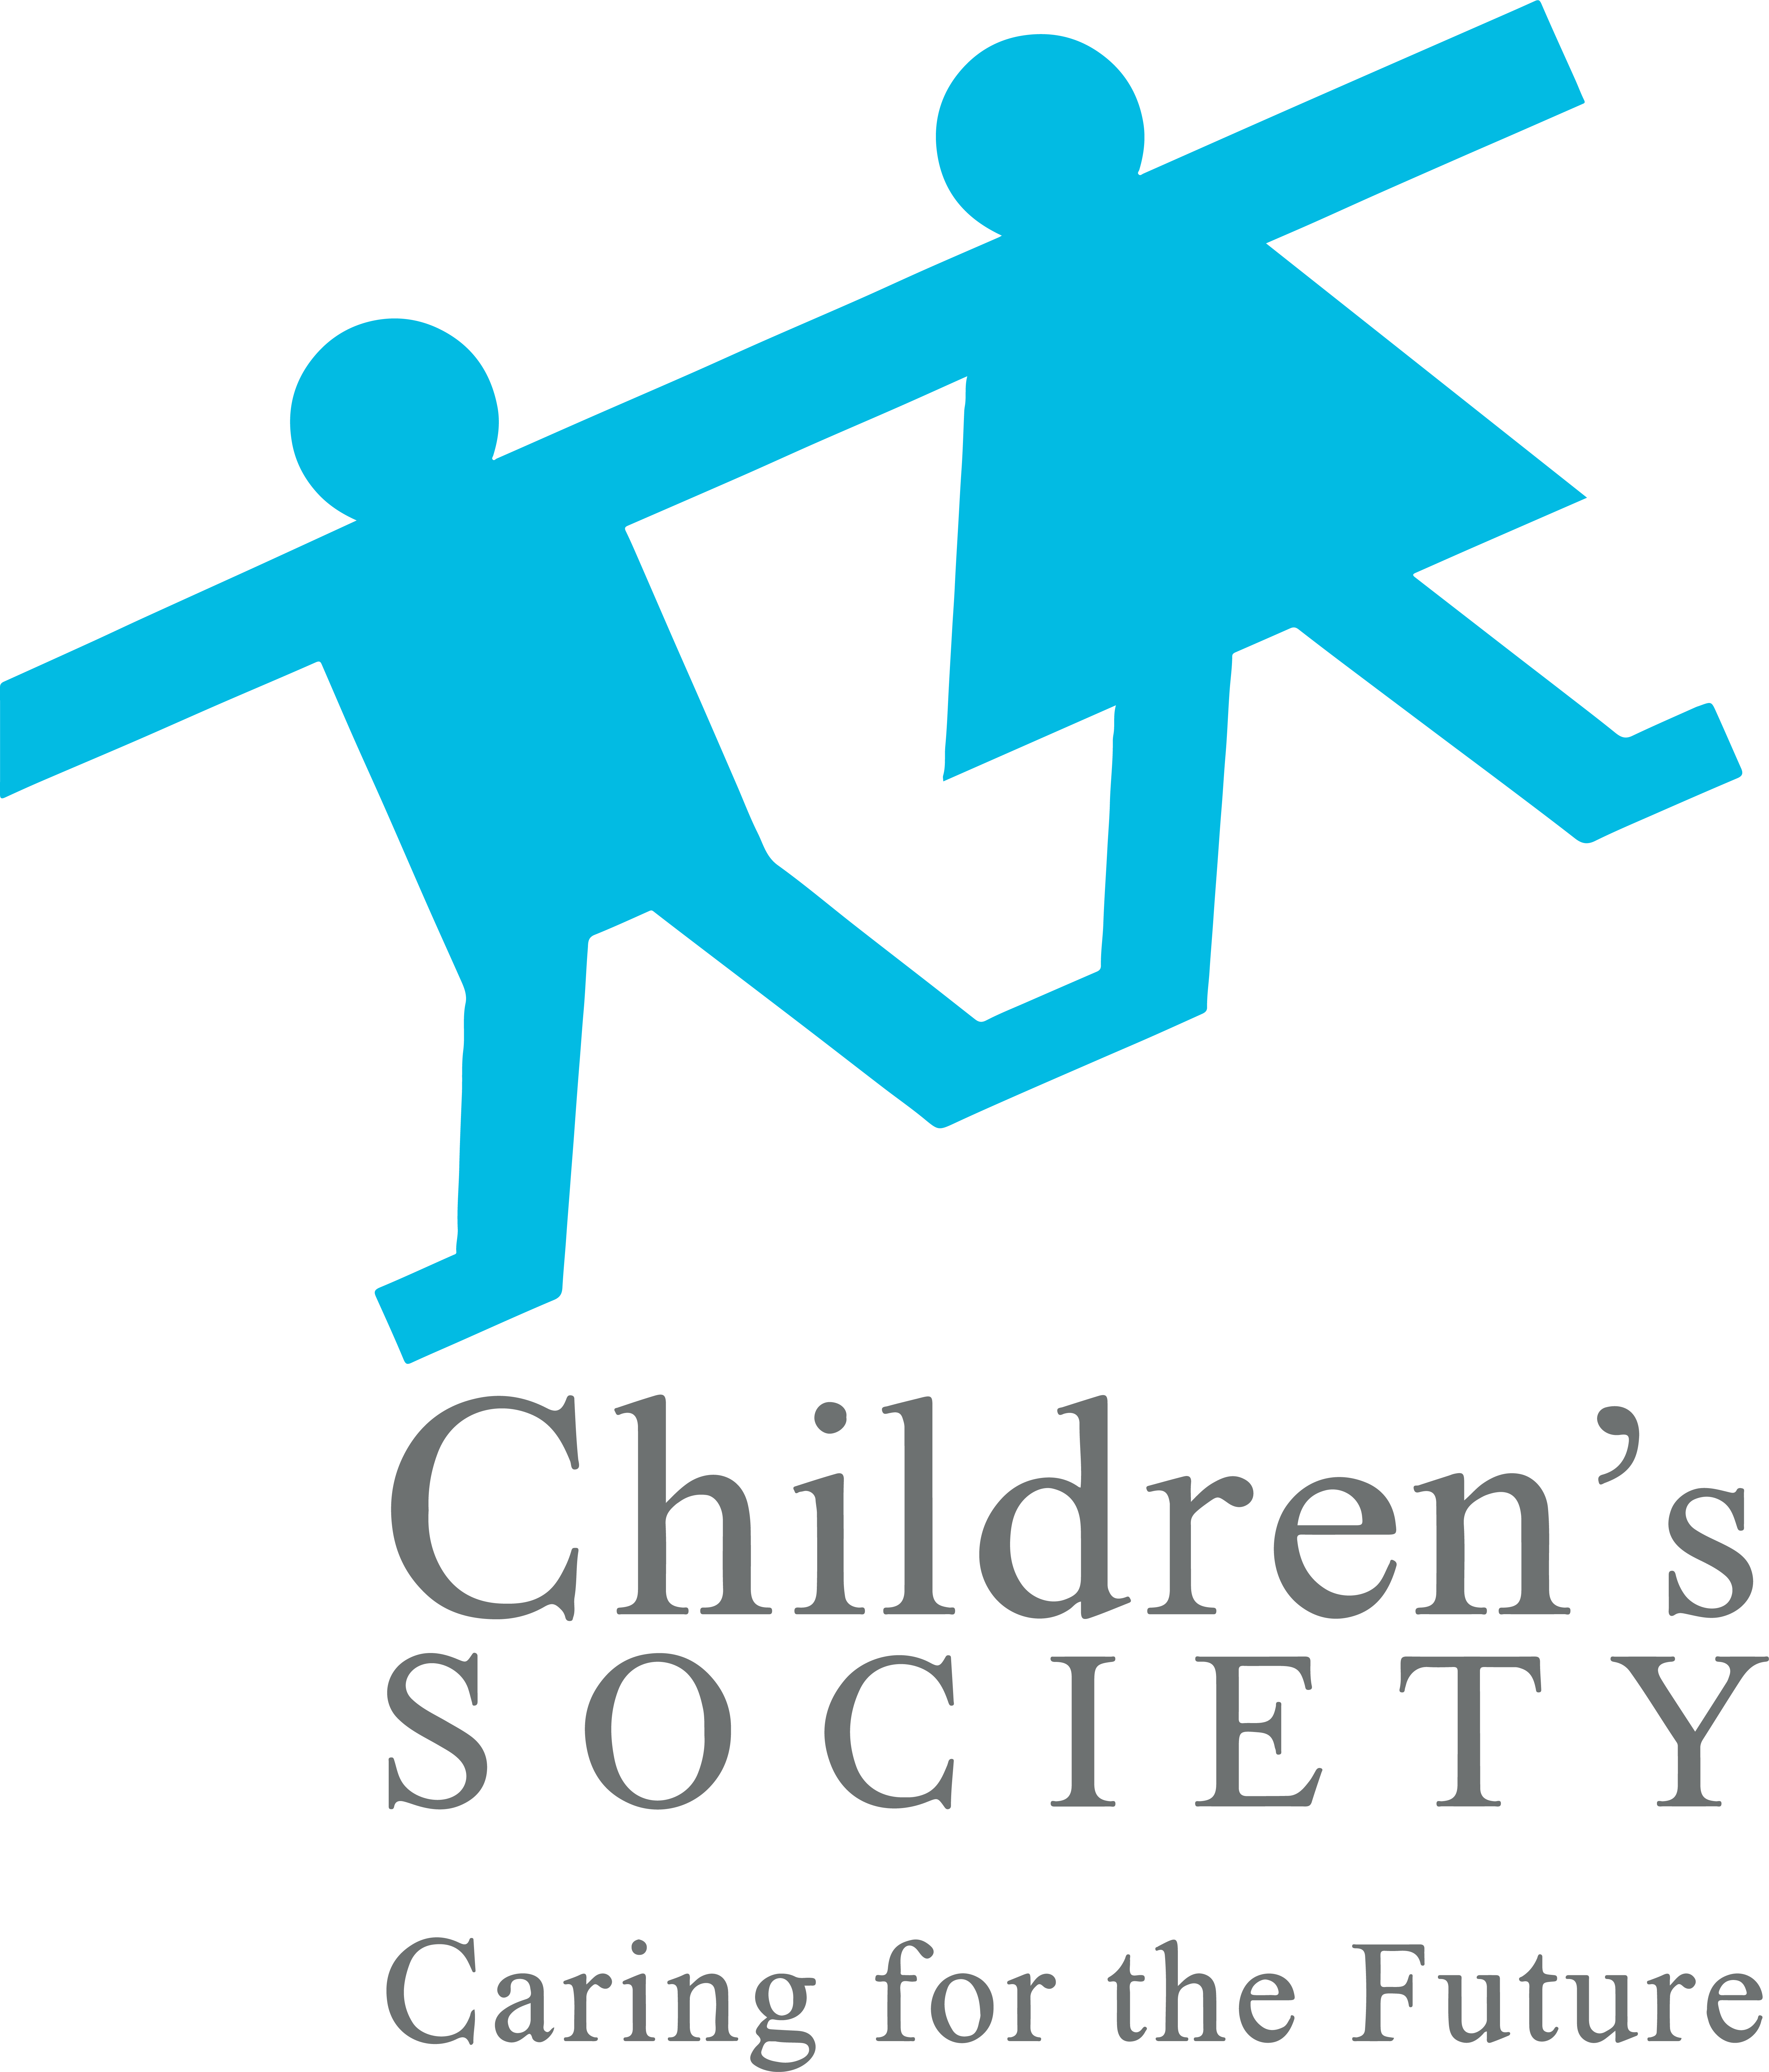 Singapore Children's Society